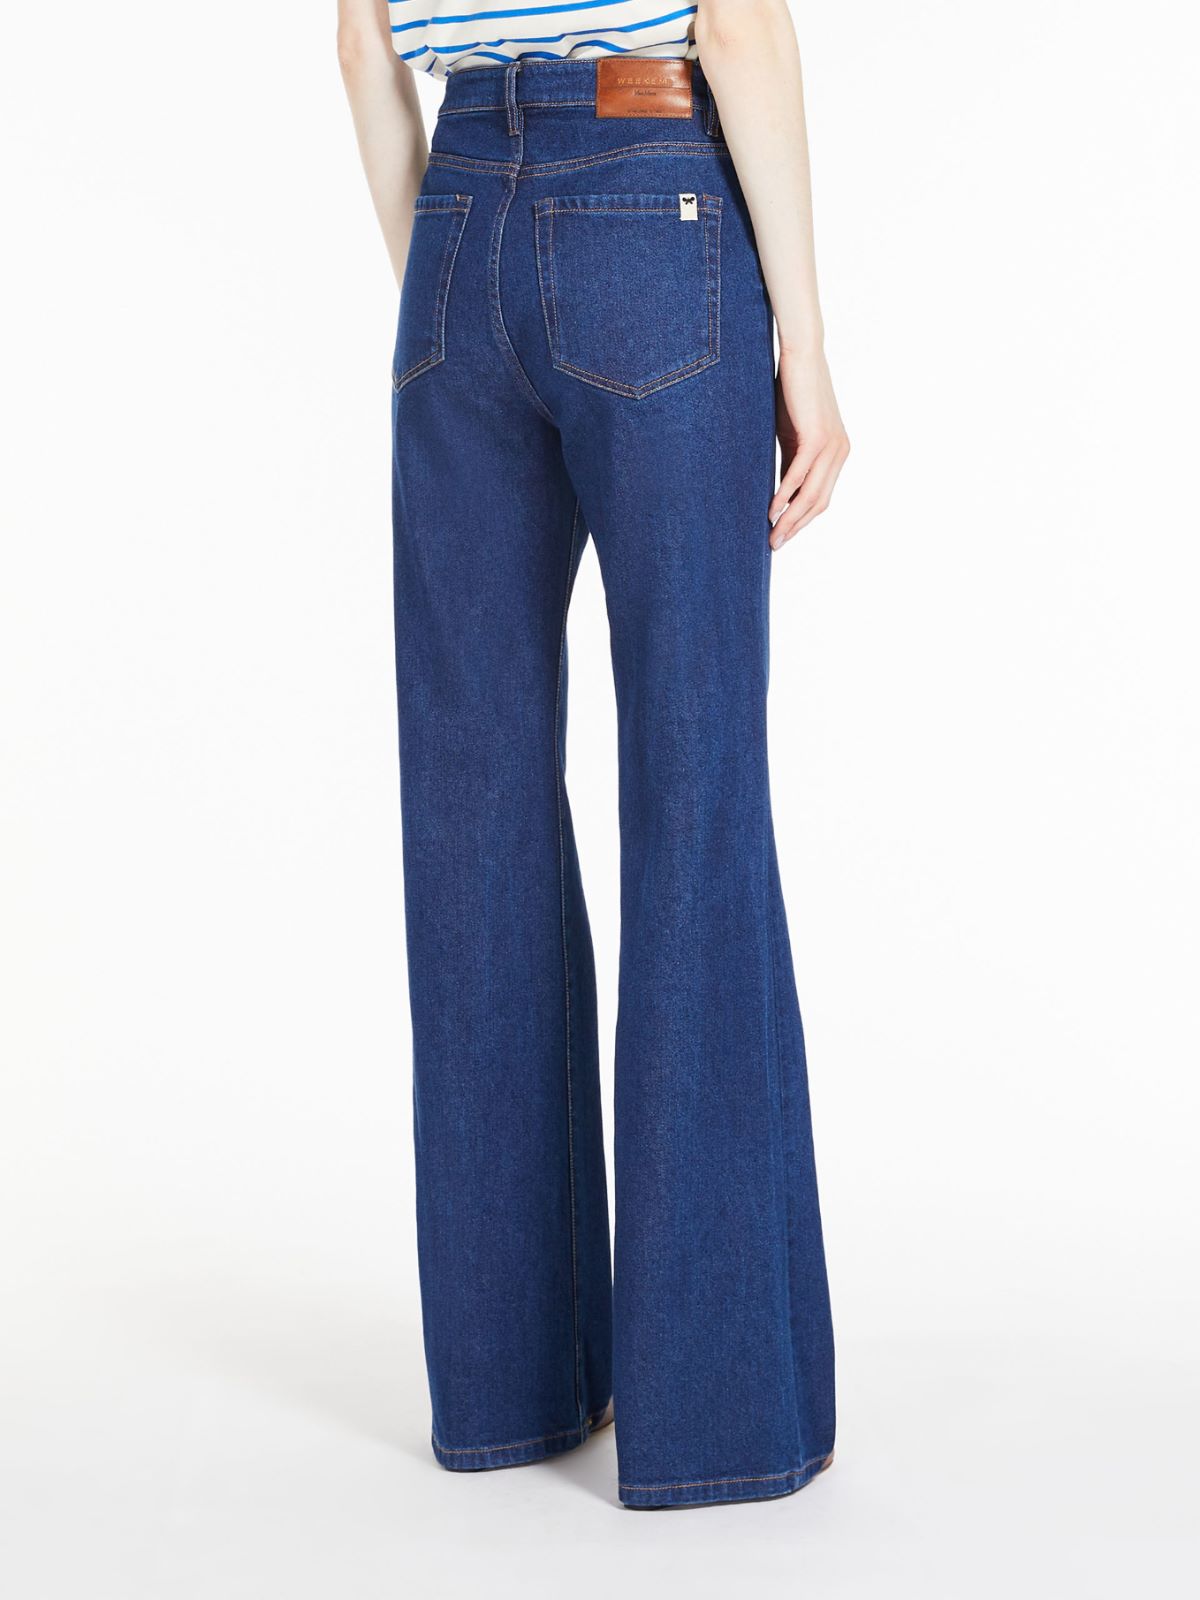 Jeans in organic cotton denim - NAVY - Weekend Max Mara - 3